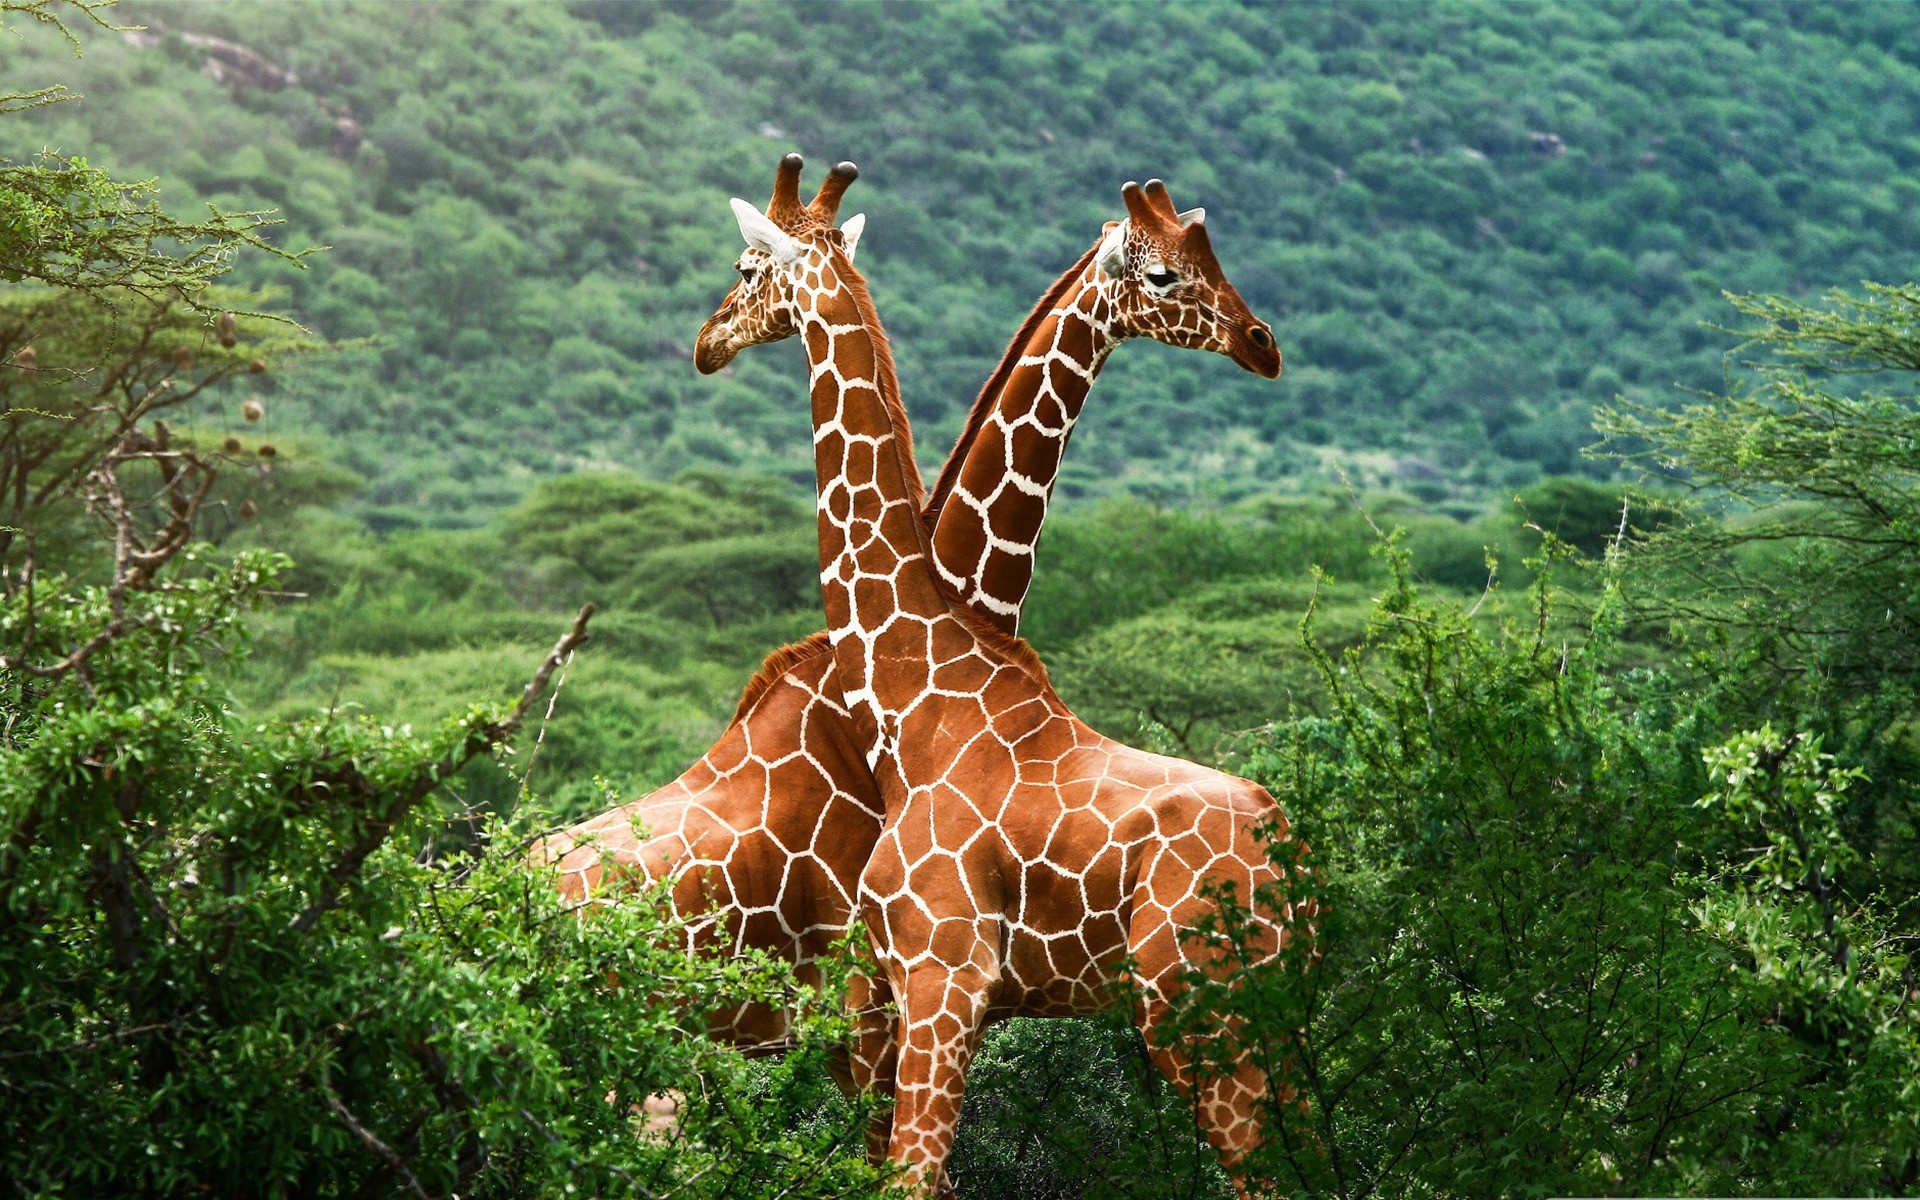 General 1920x1200 animals giraffes nature mammals